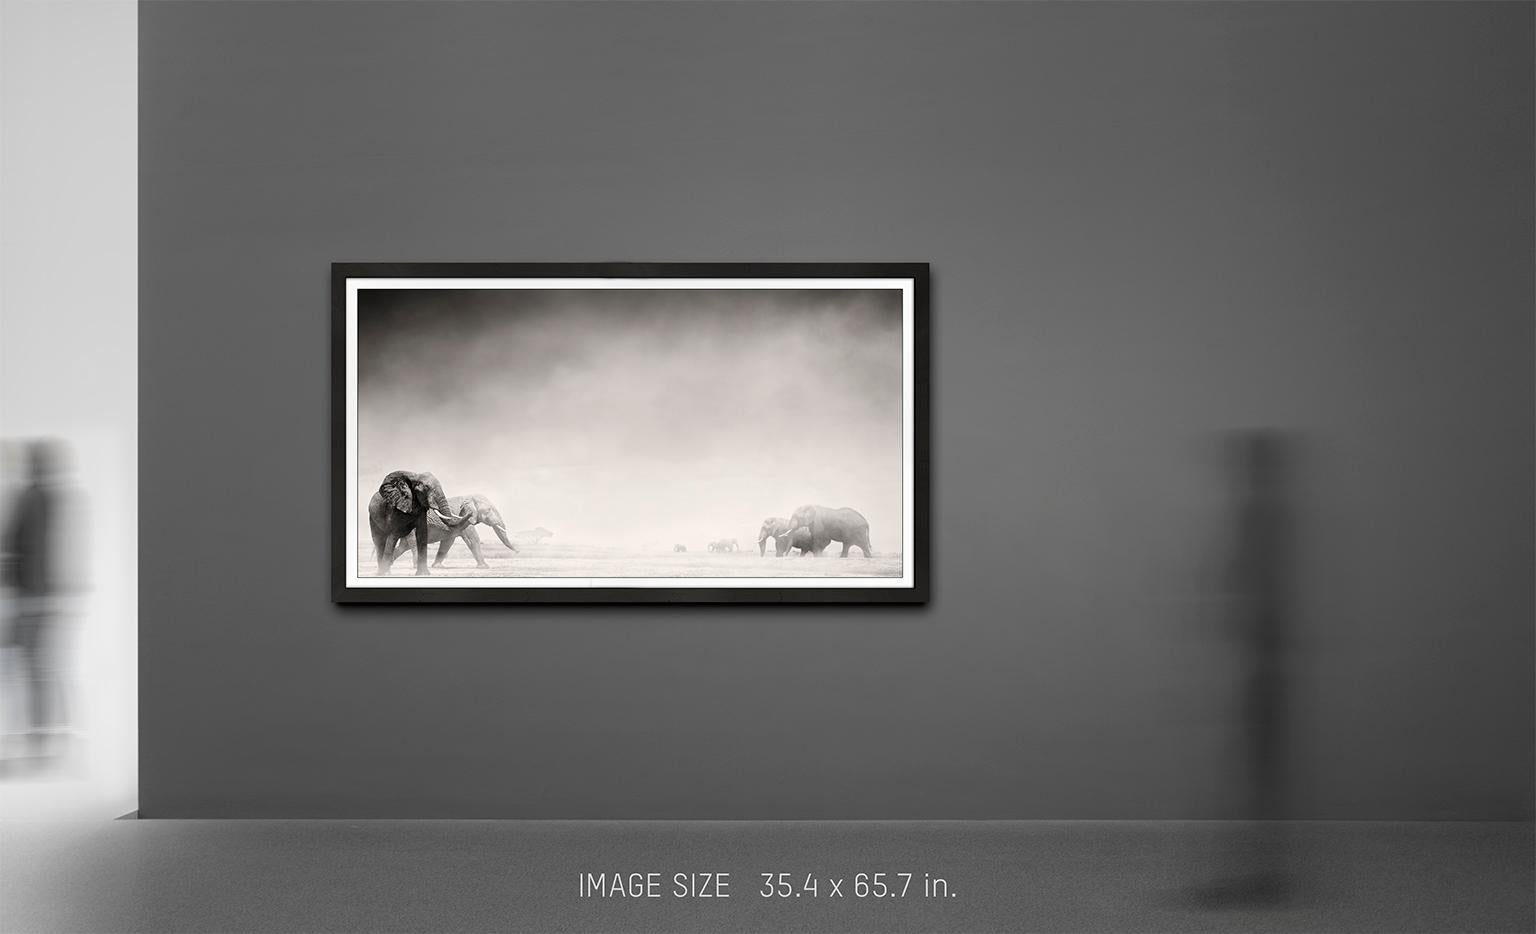 Elephants in the Dust I, Kenya, Elephant, wildlife, b&w photography - Contemporary Photograph by Joachim Schmeisser